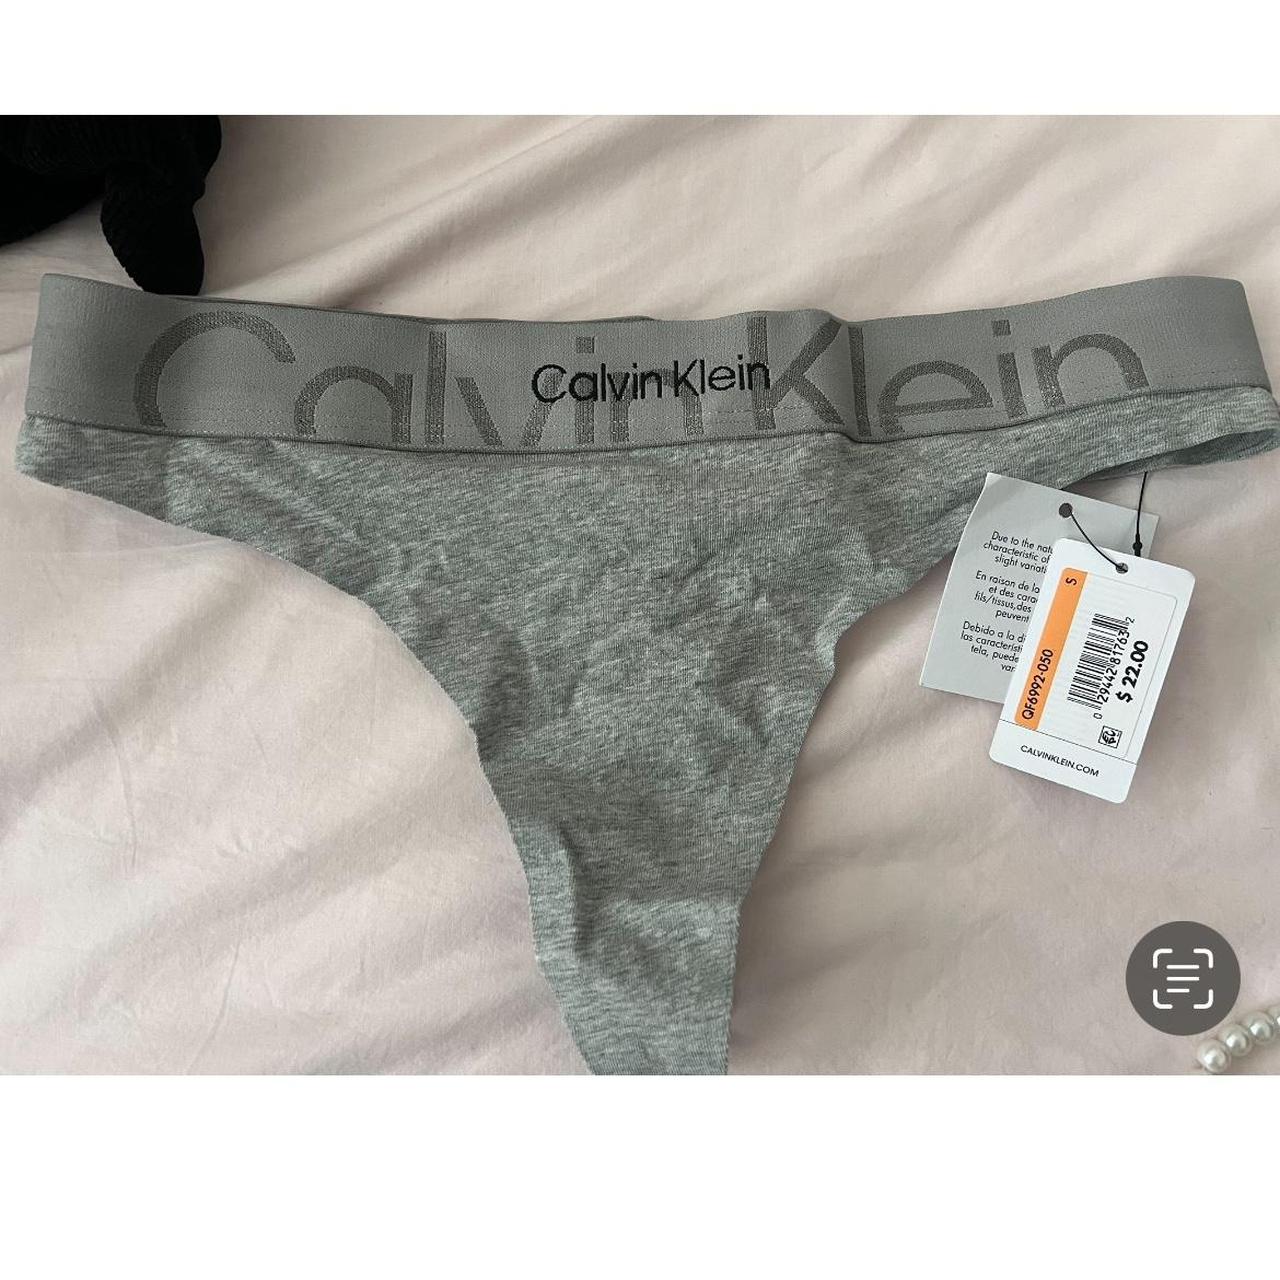 Calvin Klein Underwear. Matching top available on my - Depop